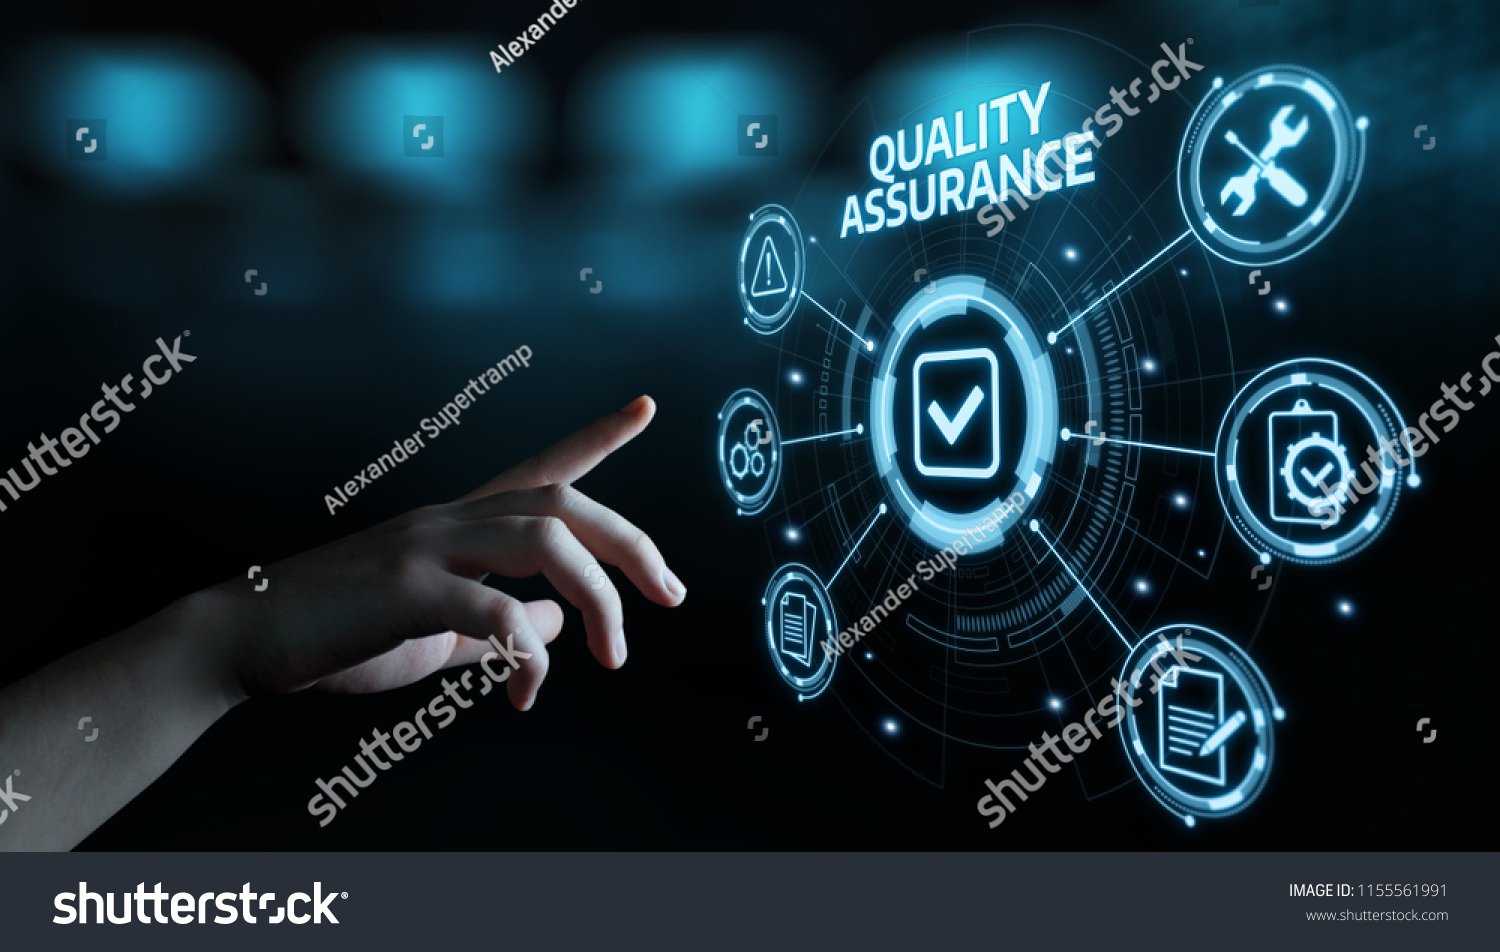 Quality Assurance Service Guarantee Standard Internet Business Technology Concept. #1155561991